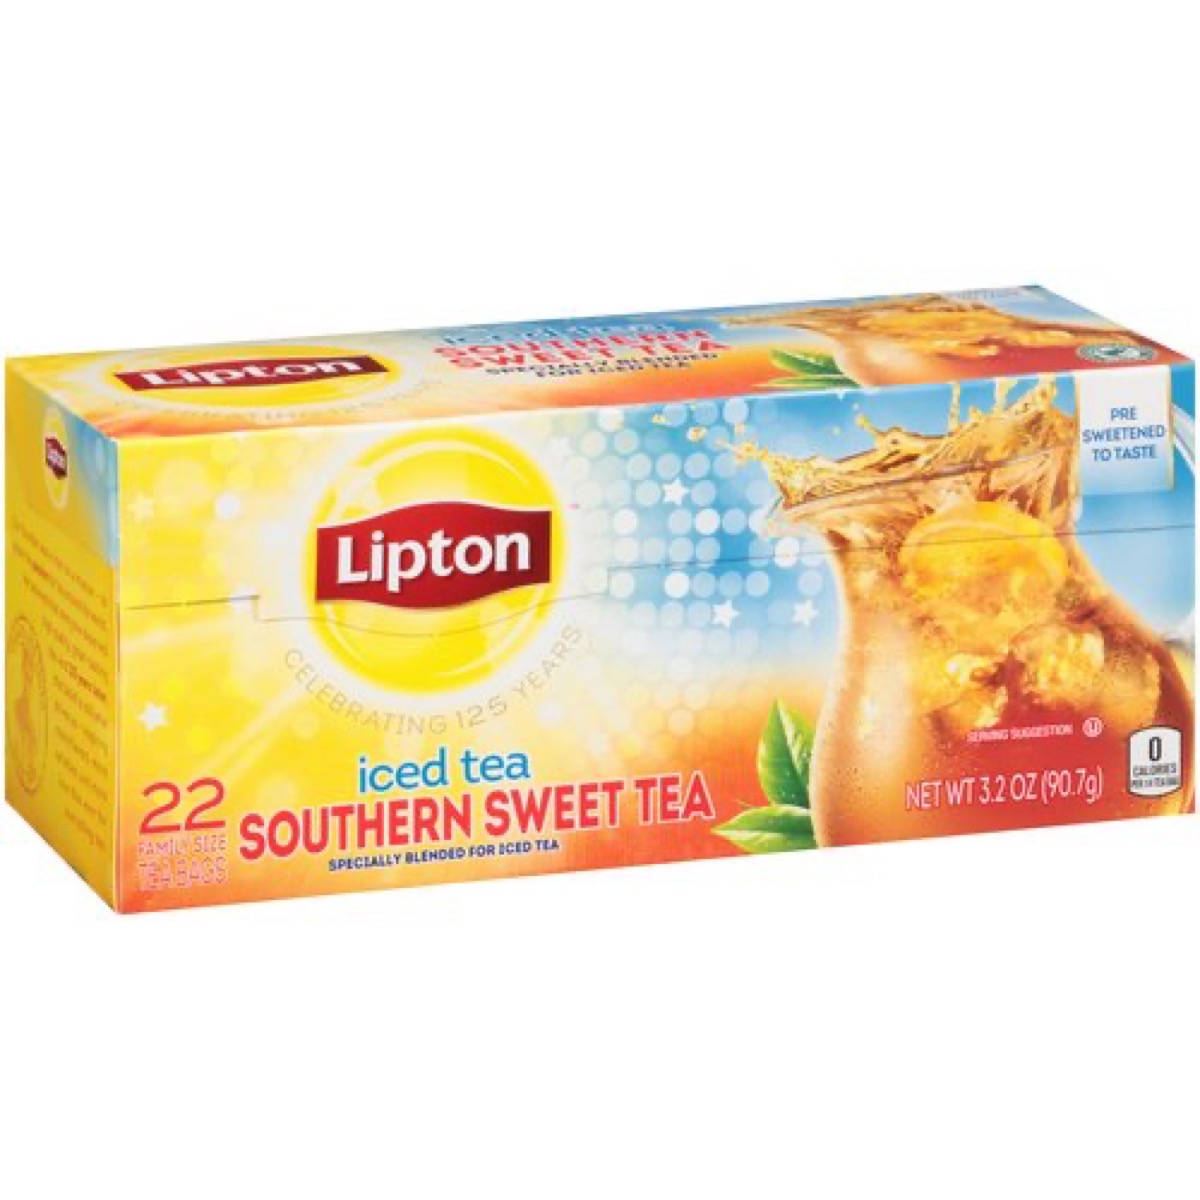 Lipton Southern Sweet Tea Bags